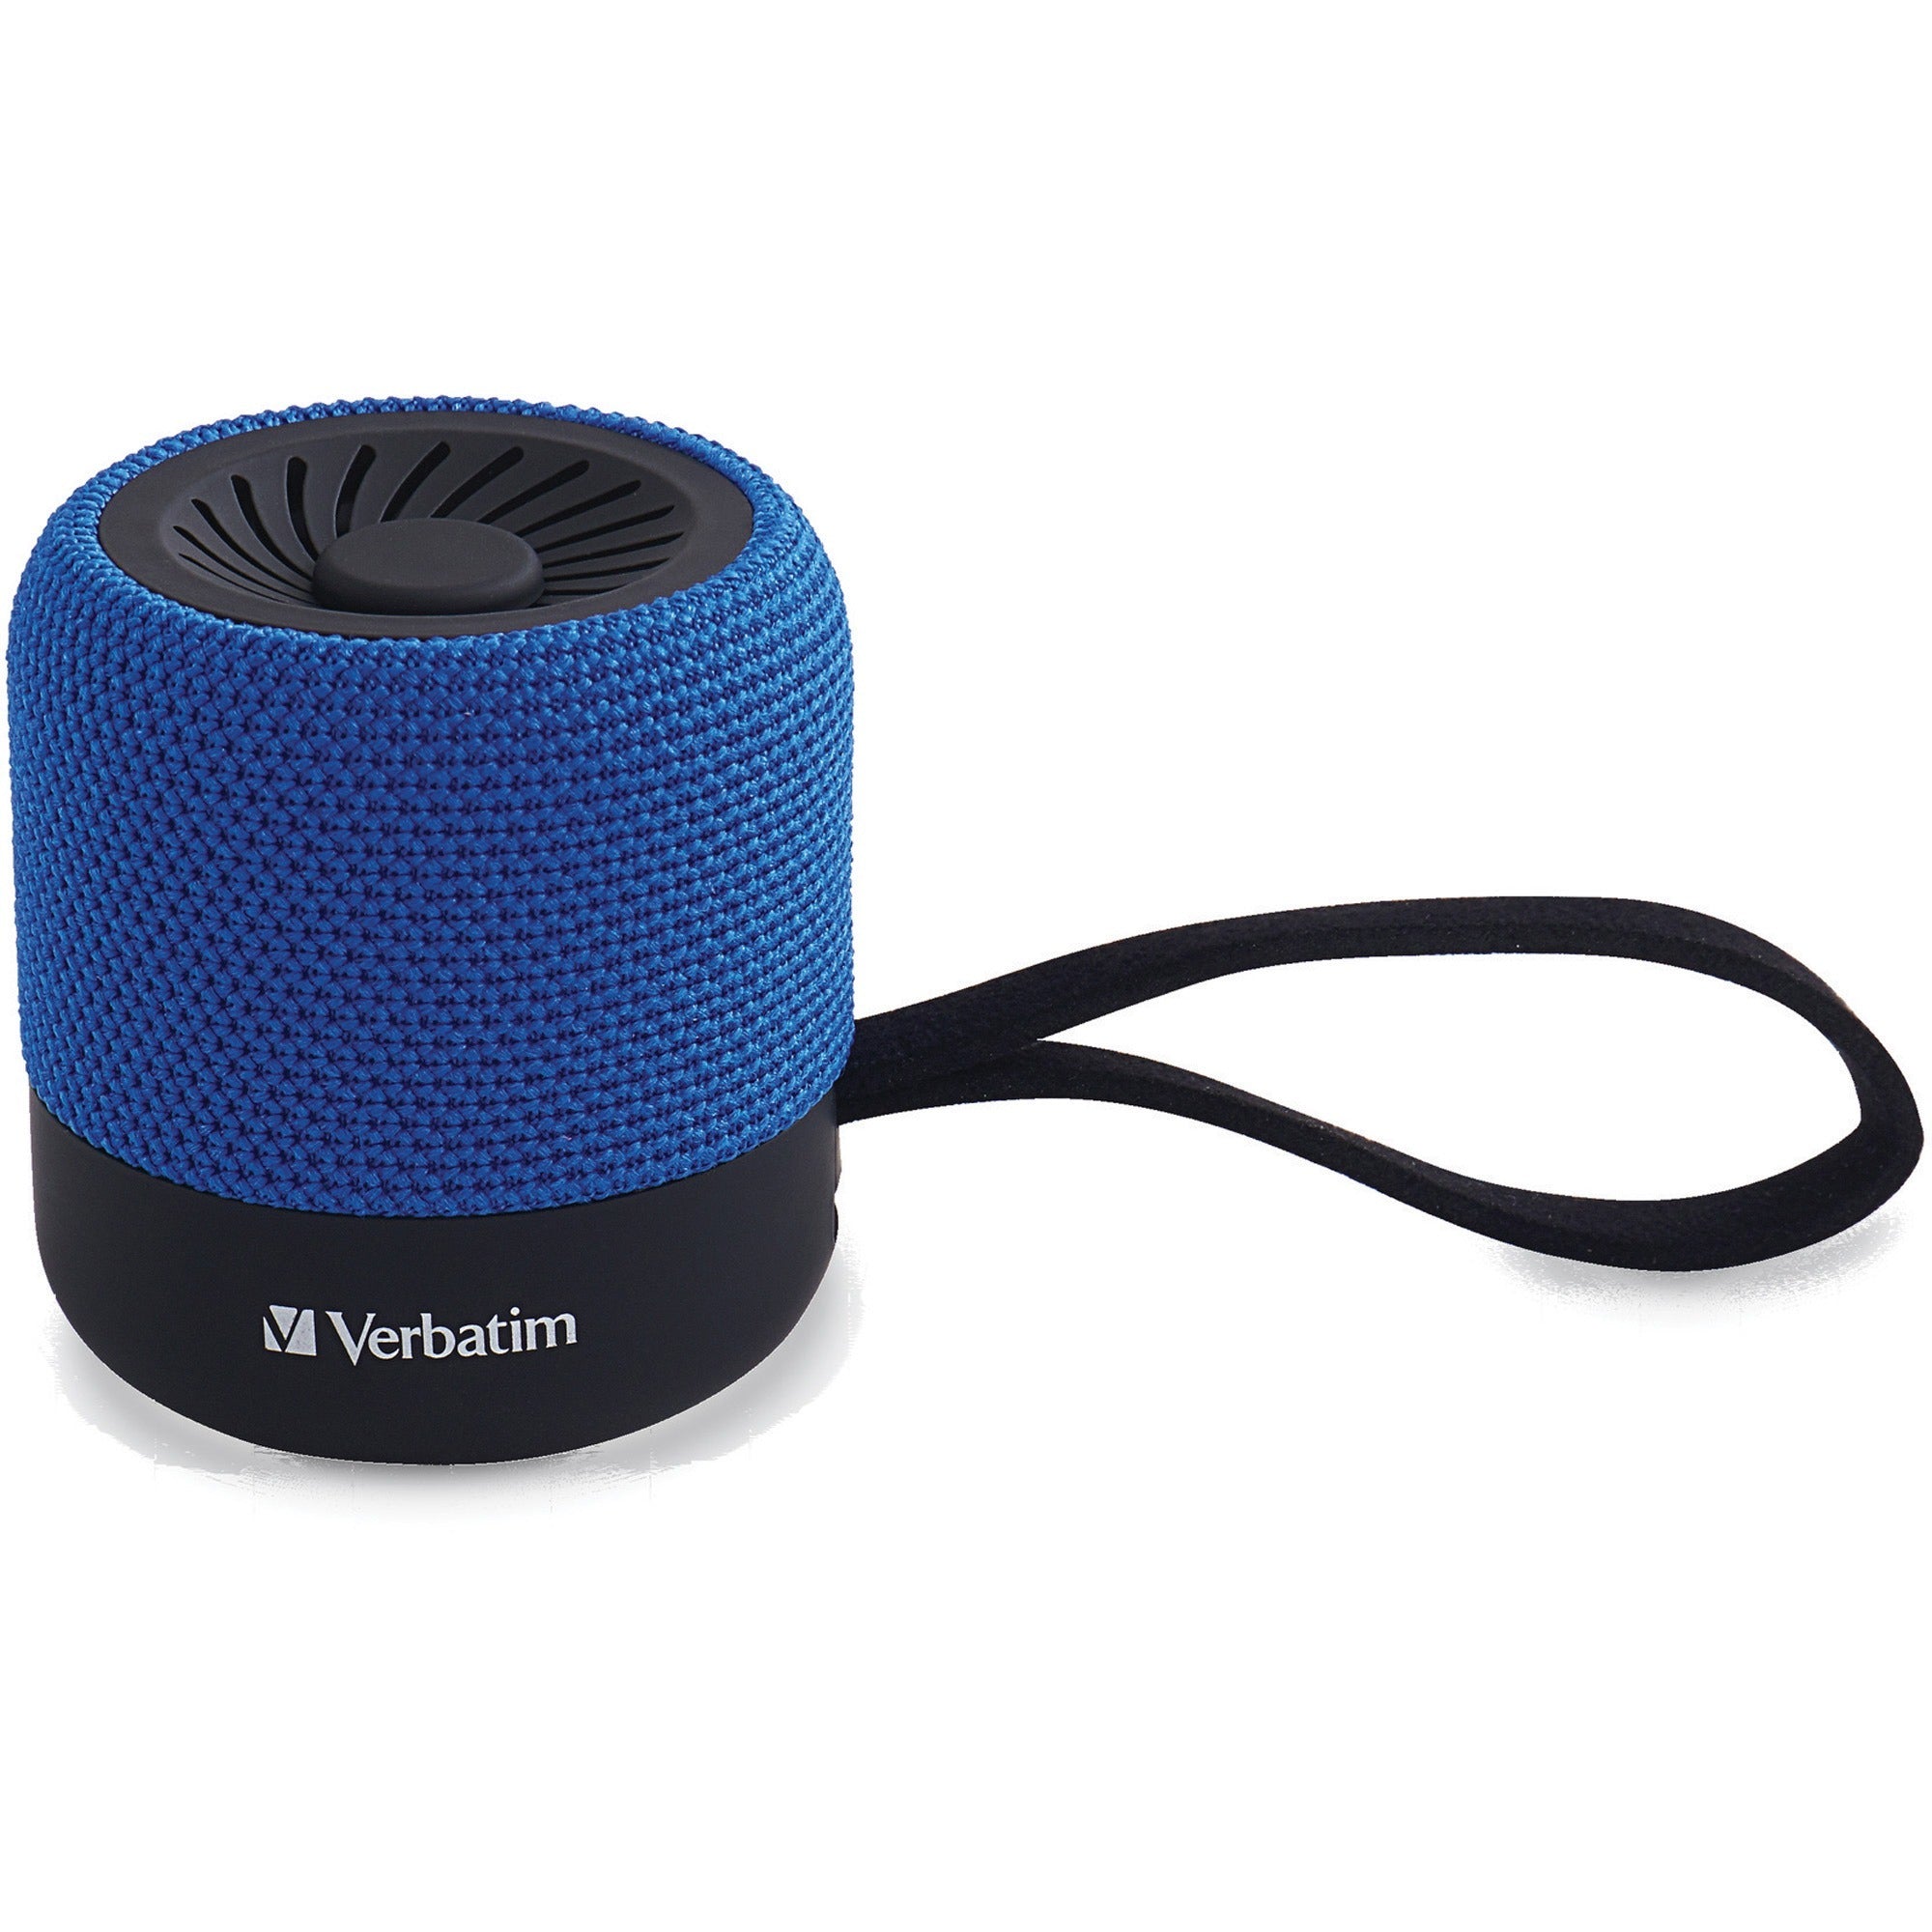 verbatim-portable-bluetooth-speaker-system-blue-100-hz-to-20-khz-truewireless-stereo-battery-rechargeable-1-pack_ver70229 - 1